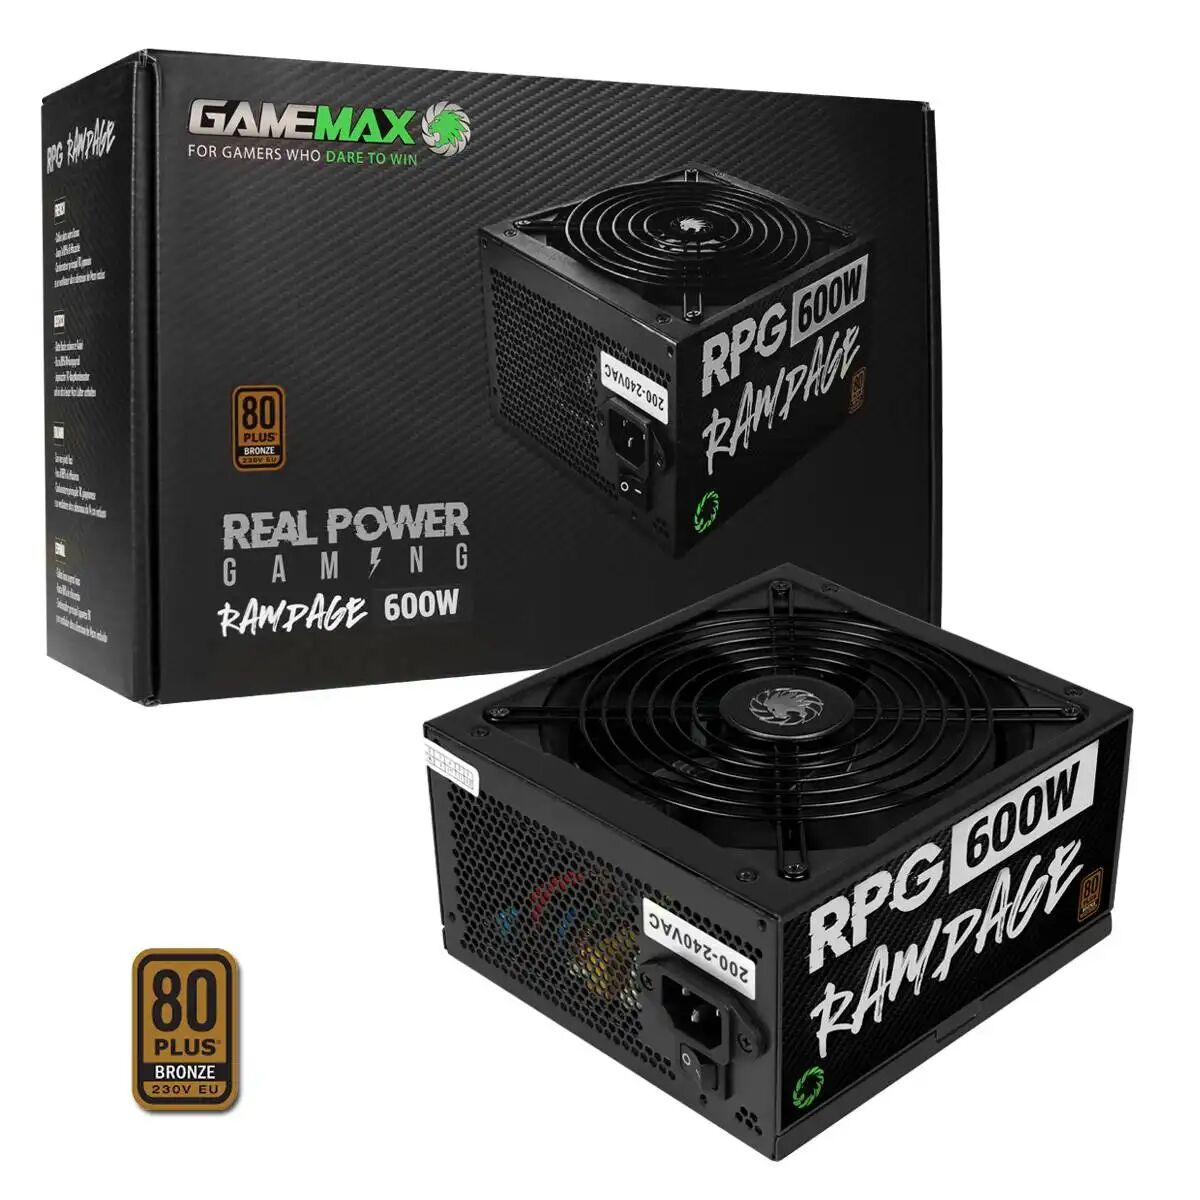 GameMax RPG 600W Rampage PSU 80 Plus Bronze Rated Power Supply Unit